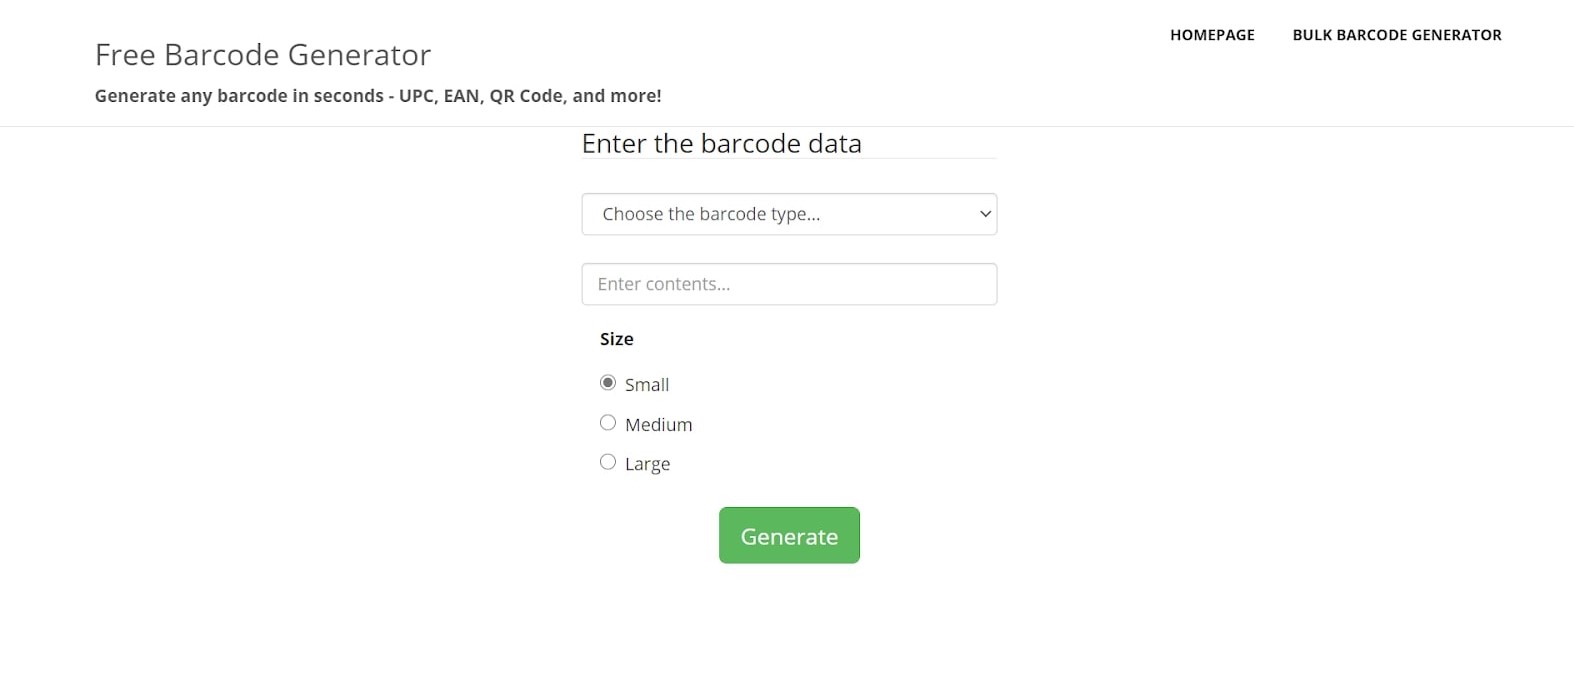 Free Barcode Generator’s simple interface